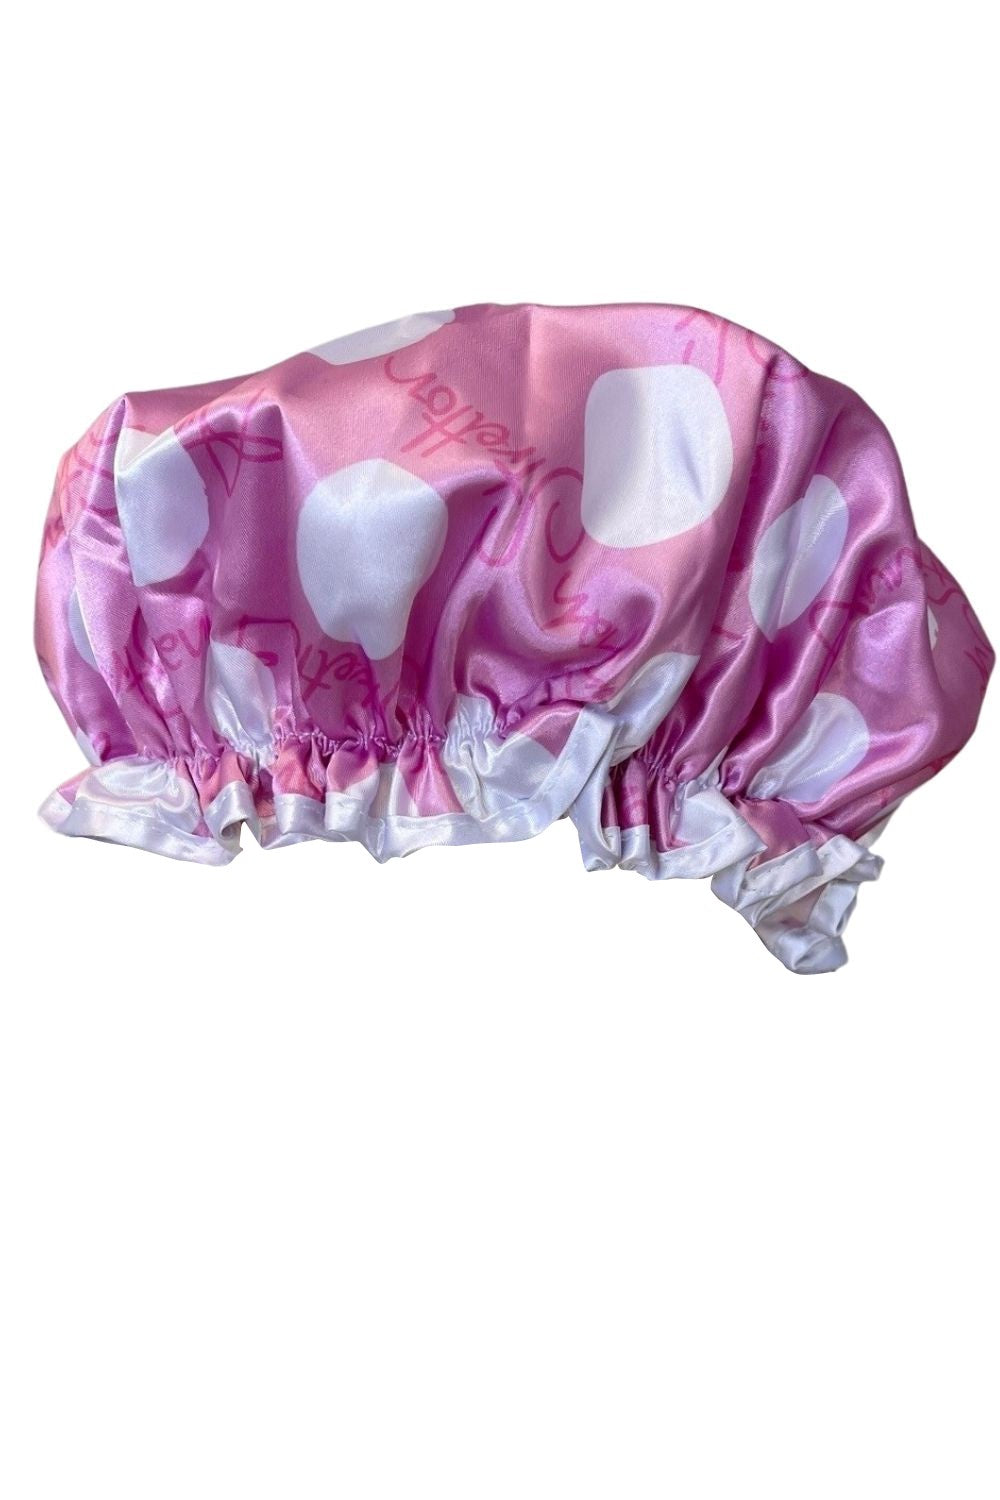 Annah Stretton Designer Shower Cap Pink